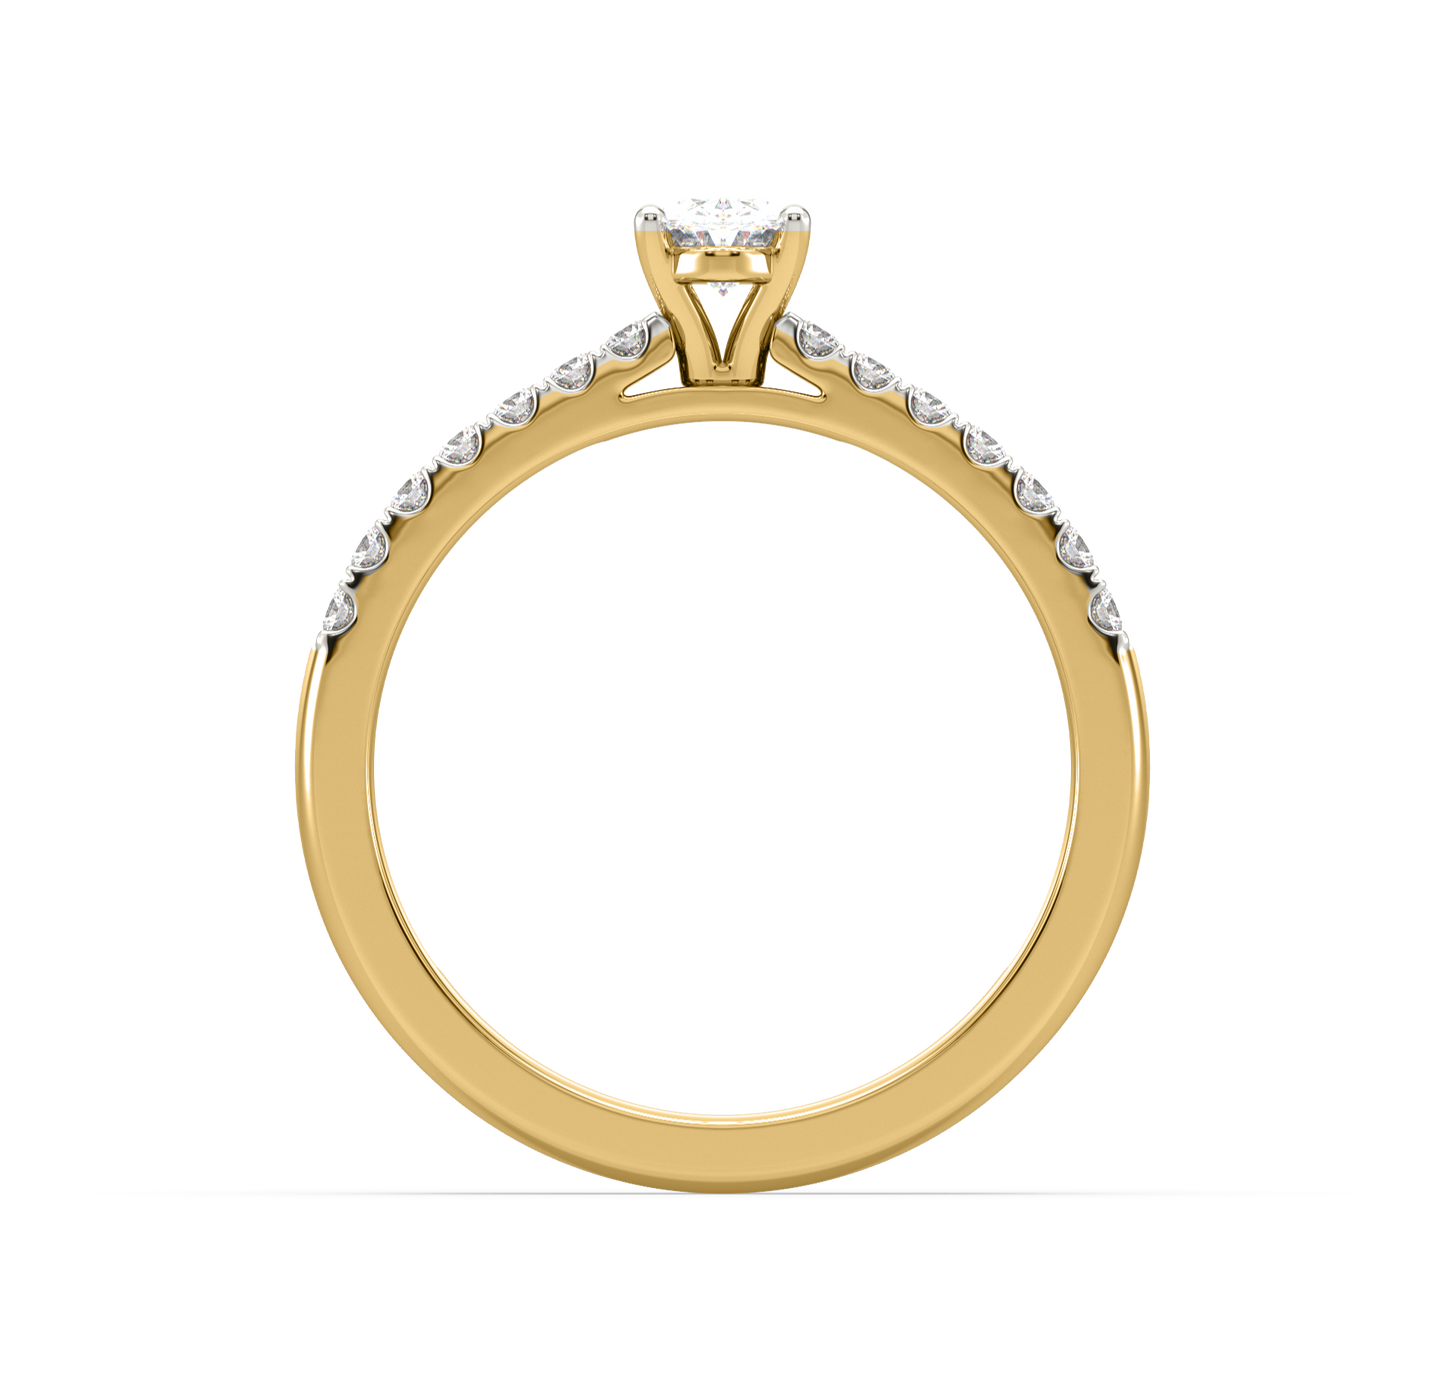 Customised ring RG21010-PH21020